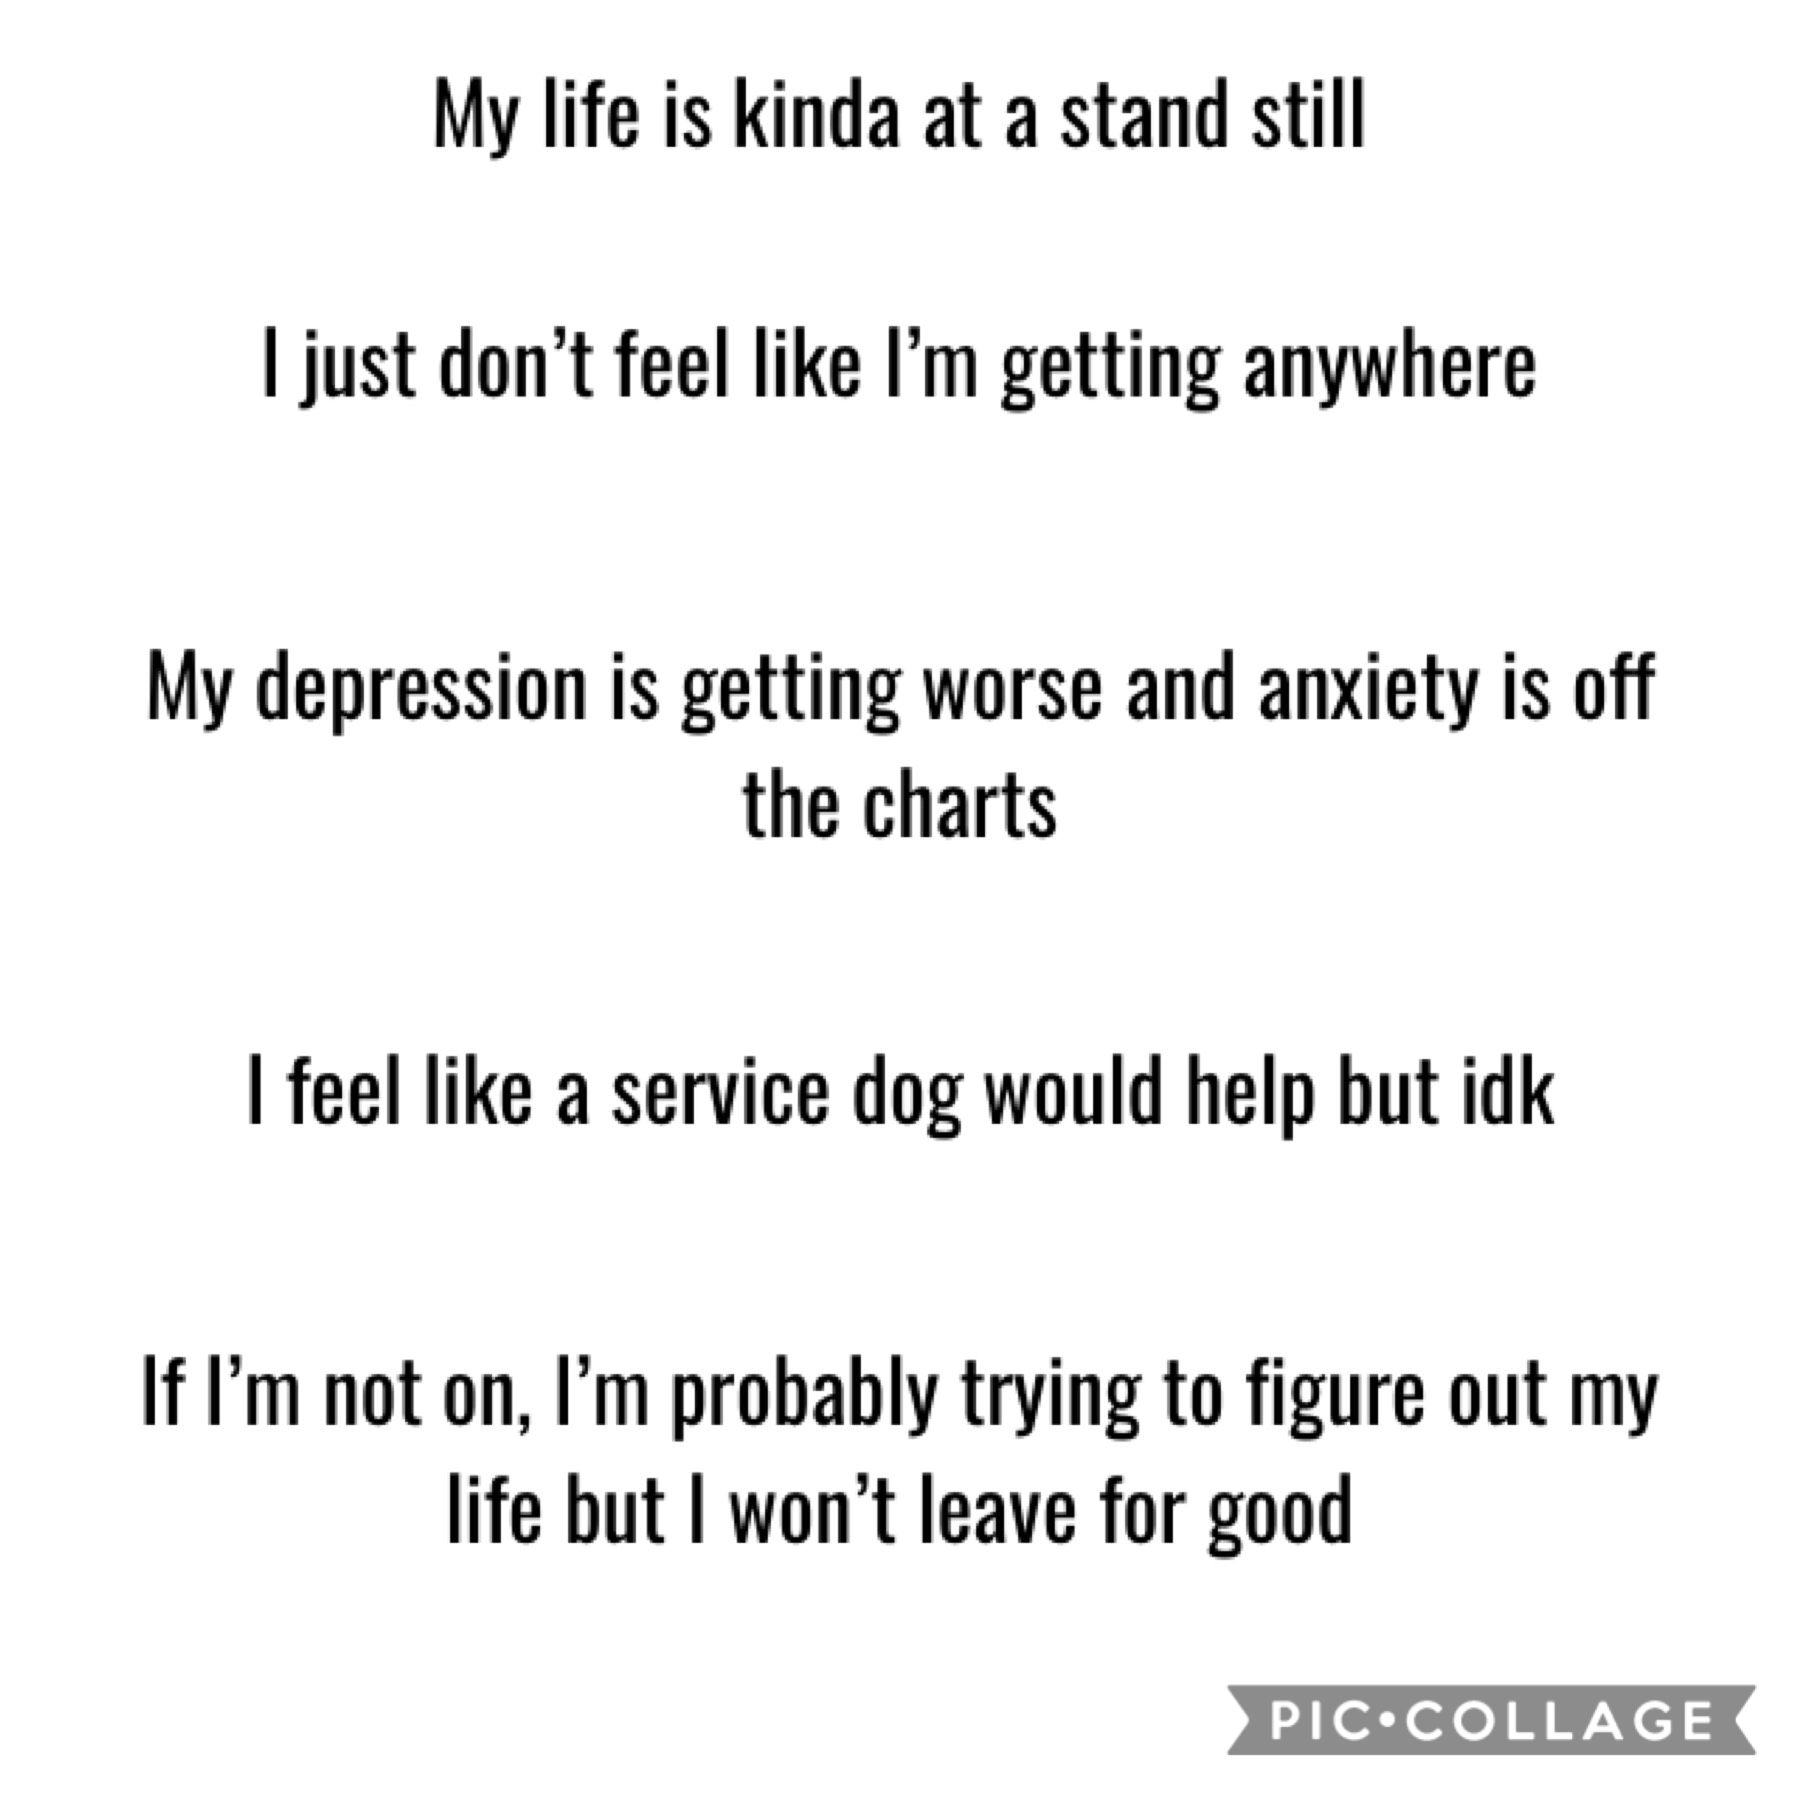 My life...🙁 depression sucks